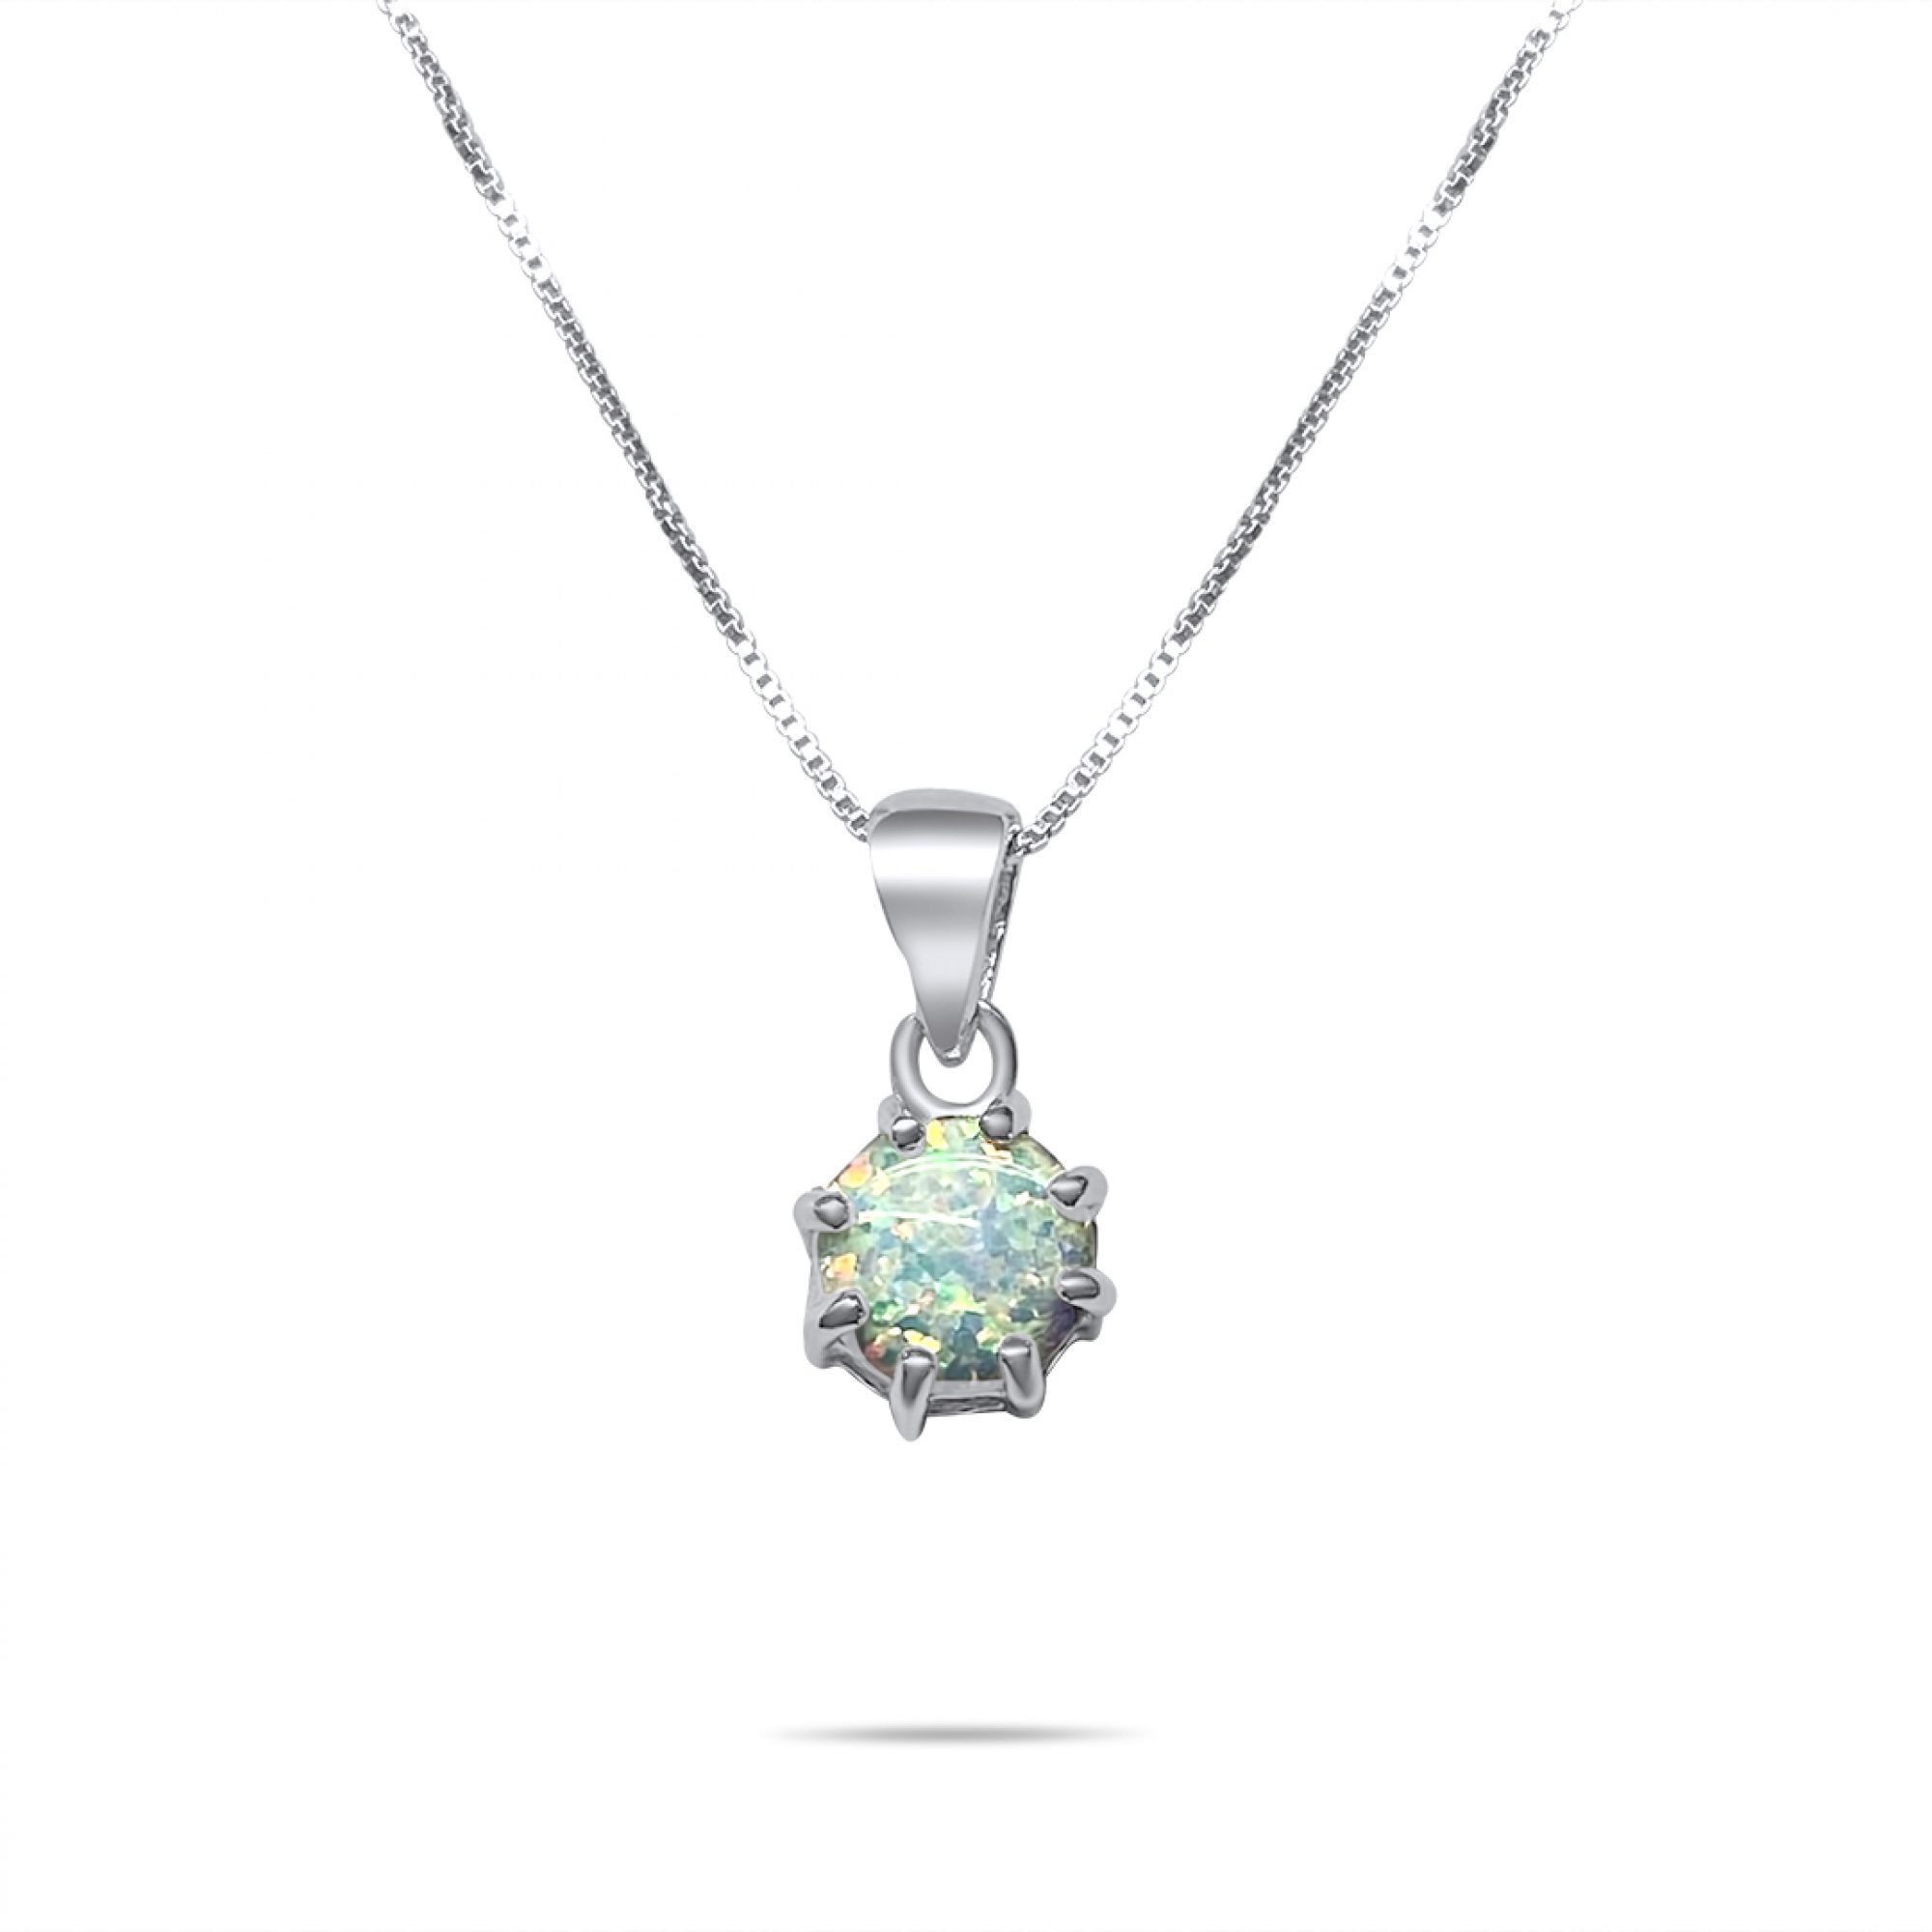 White opal pendant